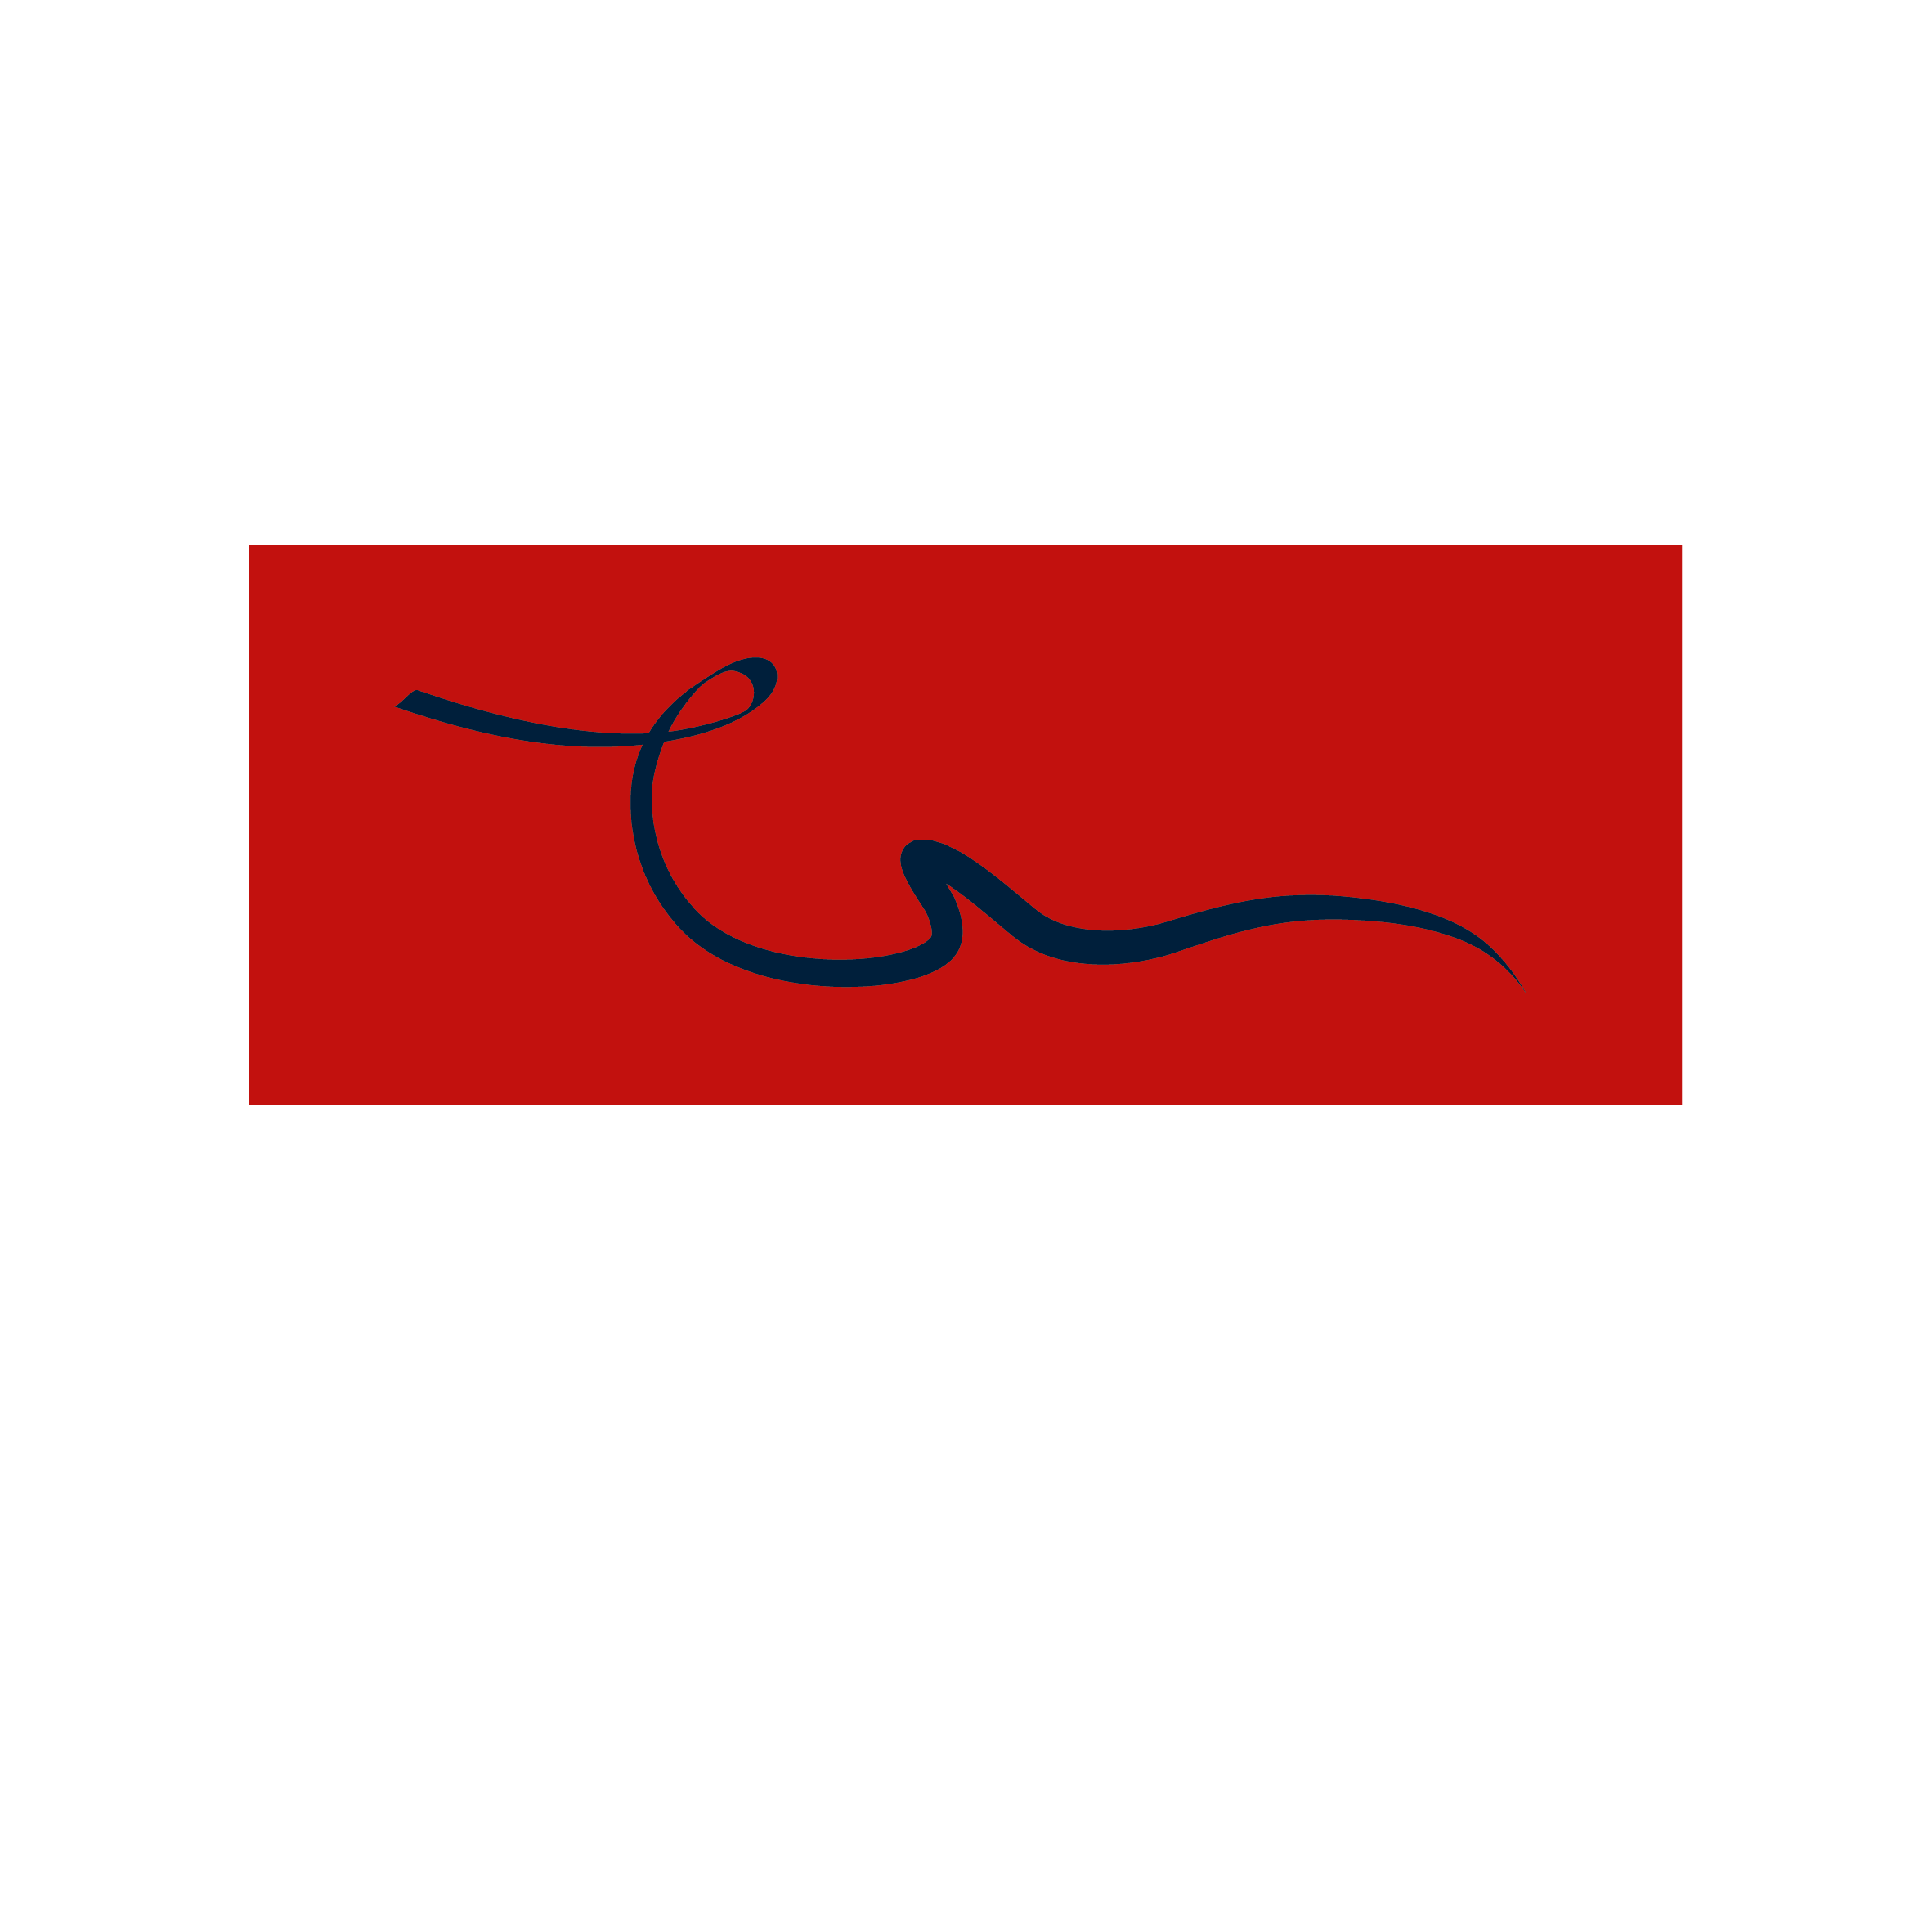 Dupini